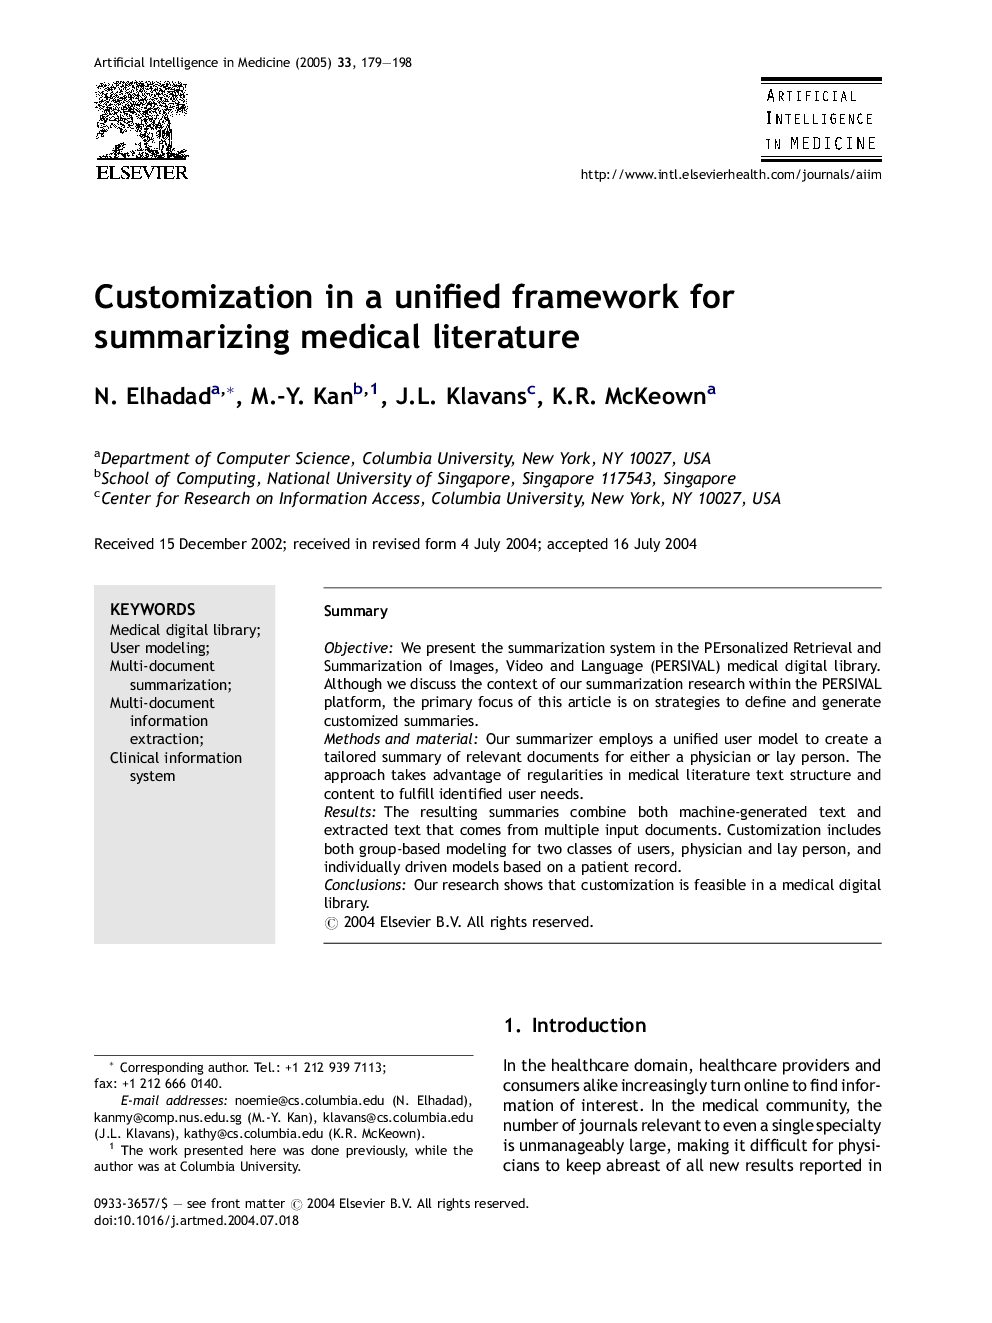 Customization in a unified framework for summarizing medical literature